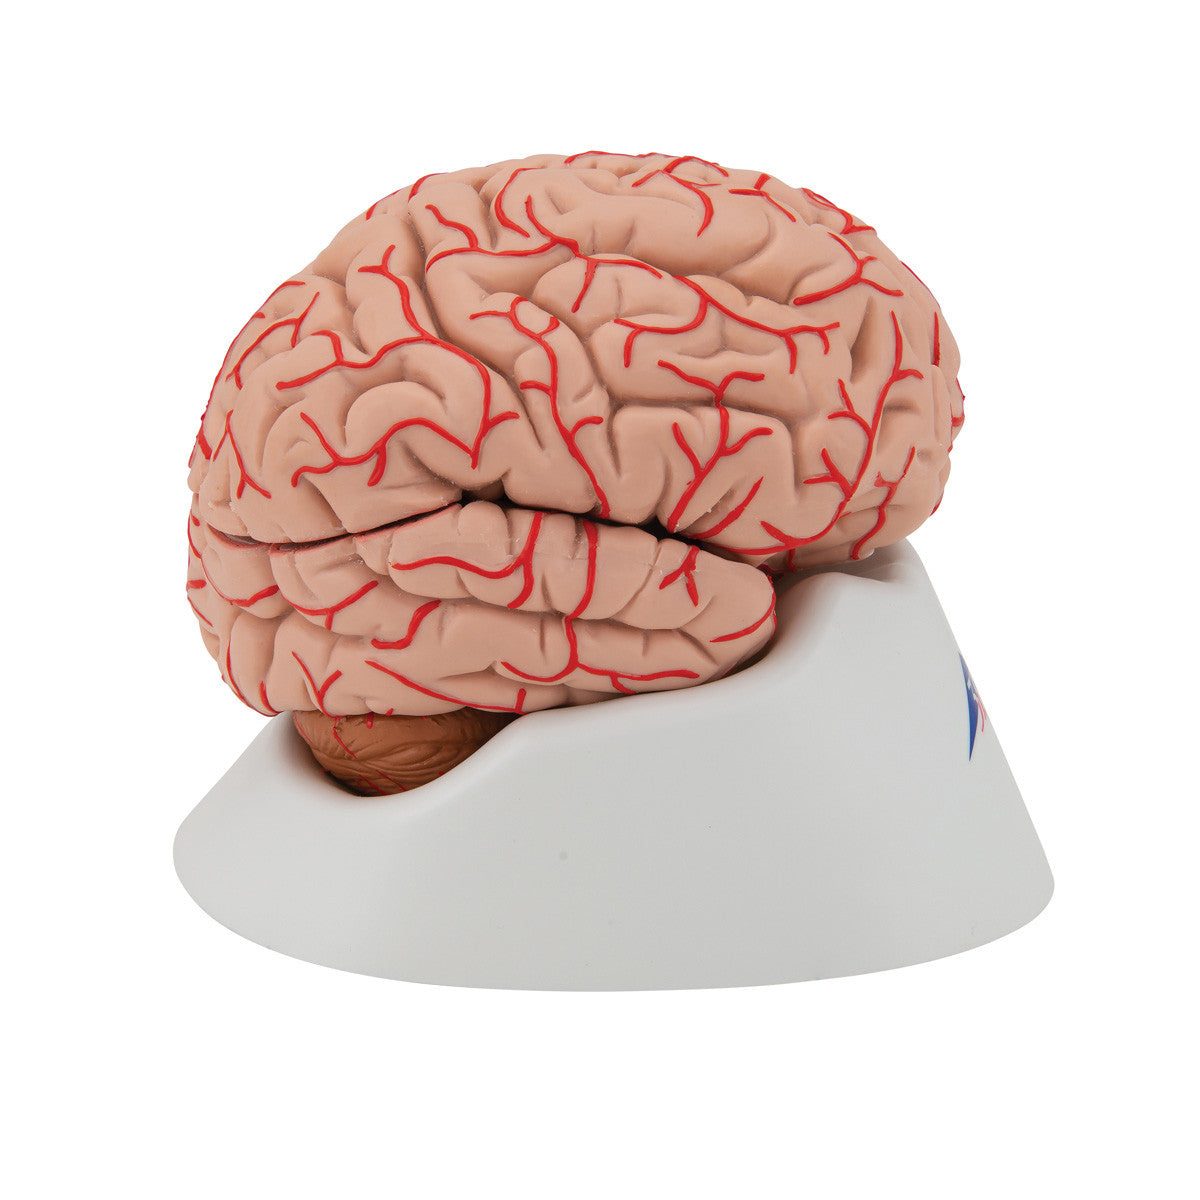 c20_03_1200_1200_human-brain-model-with-arteries-9-part-3b-smart-anatomy__14472.1589753157.1280.1280.jpg